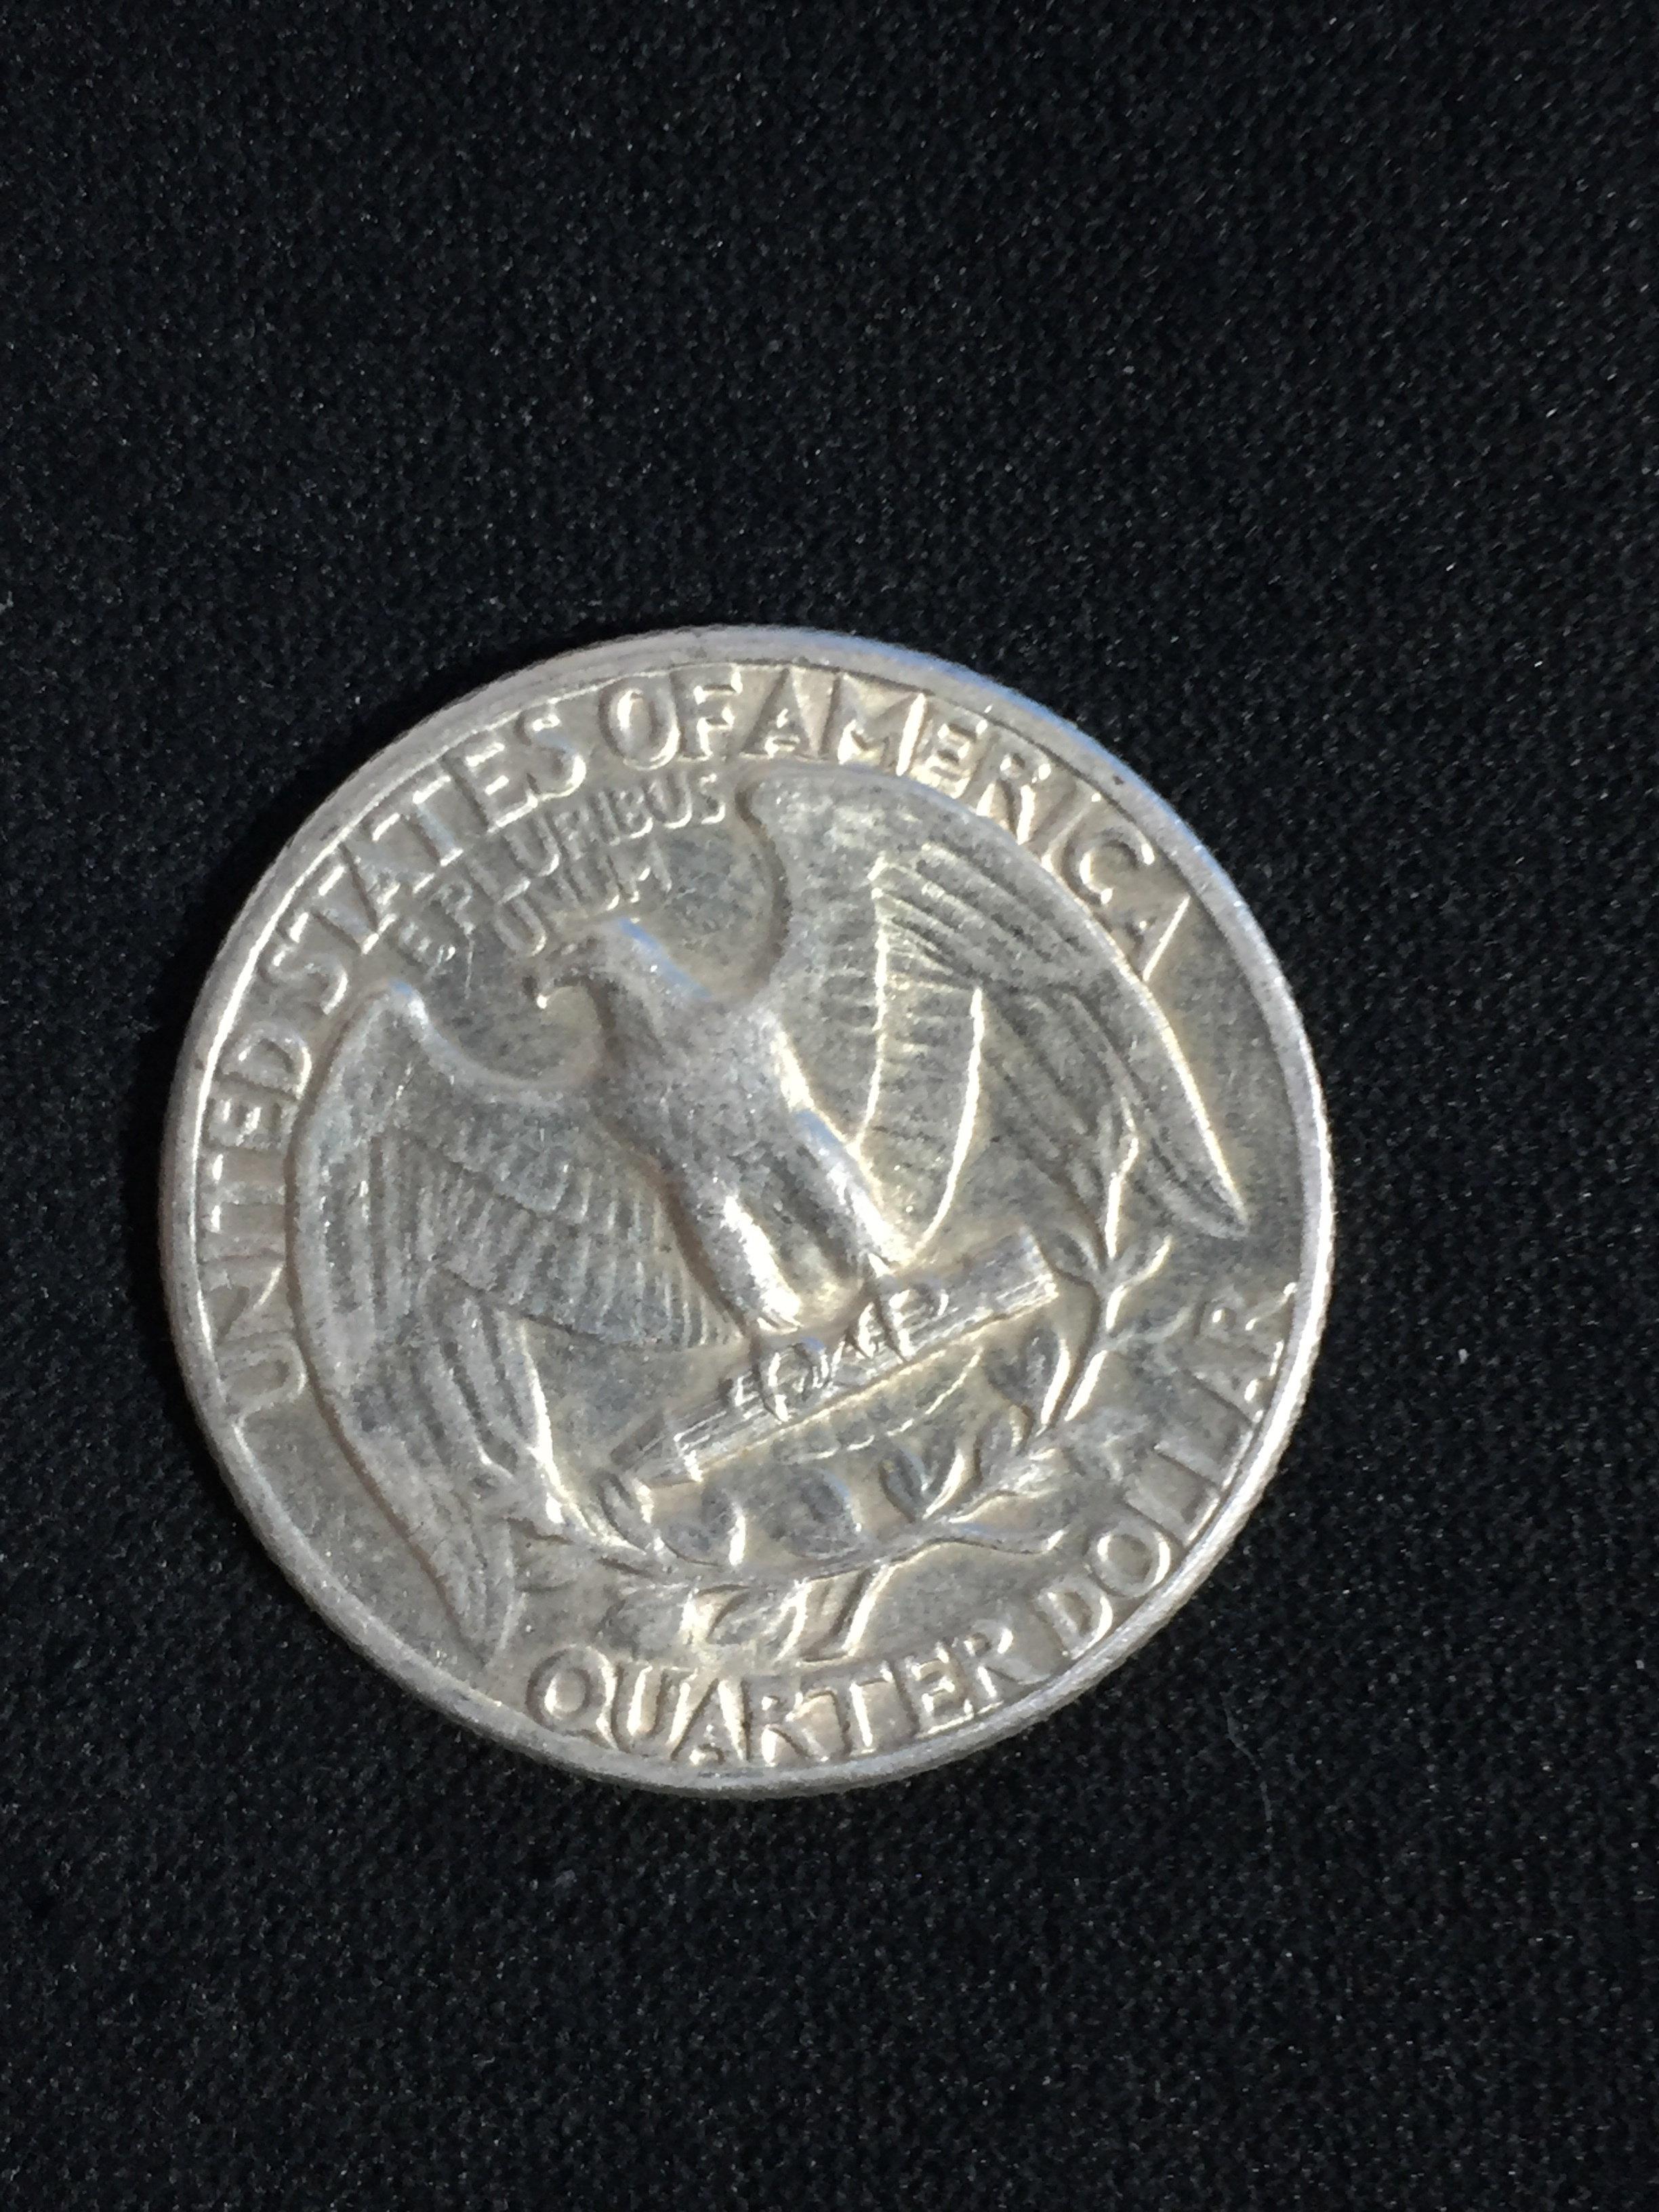 1964 United States Washington Quarter - 90% Silver Uncirculated BU Coin